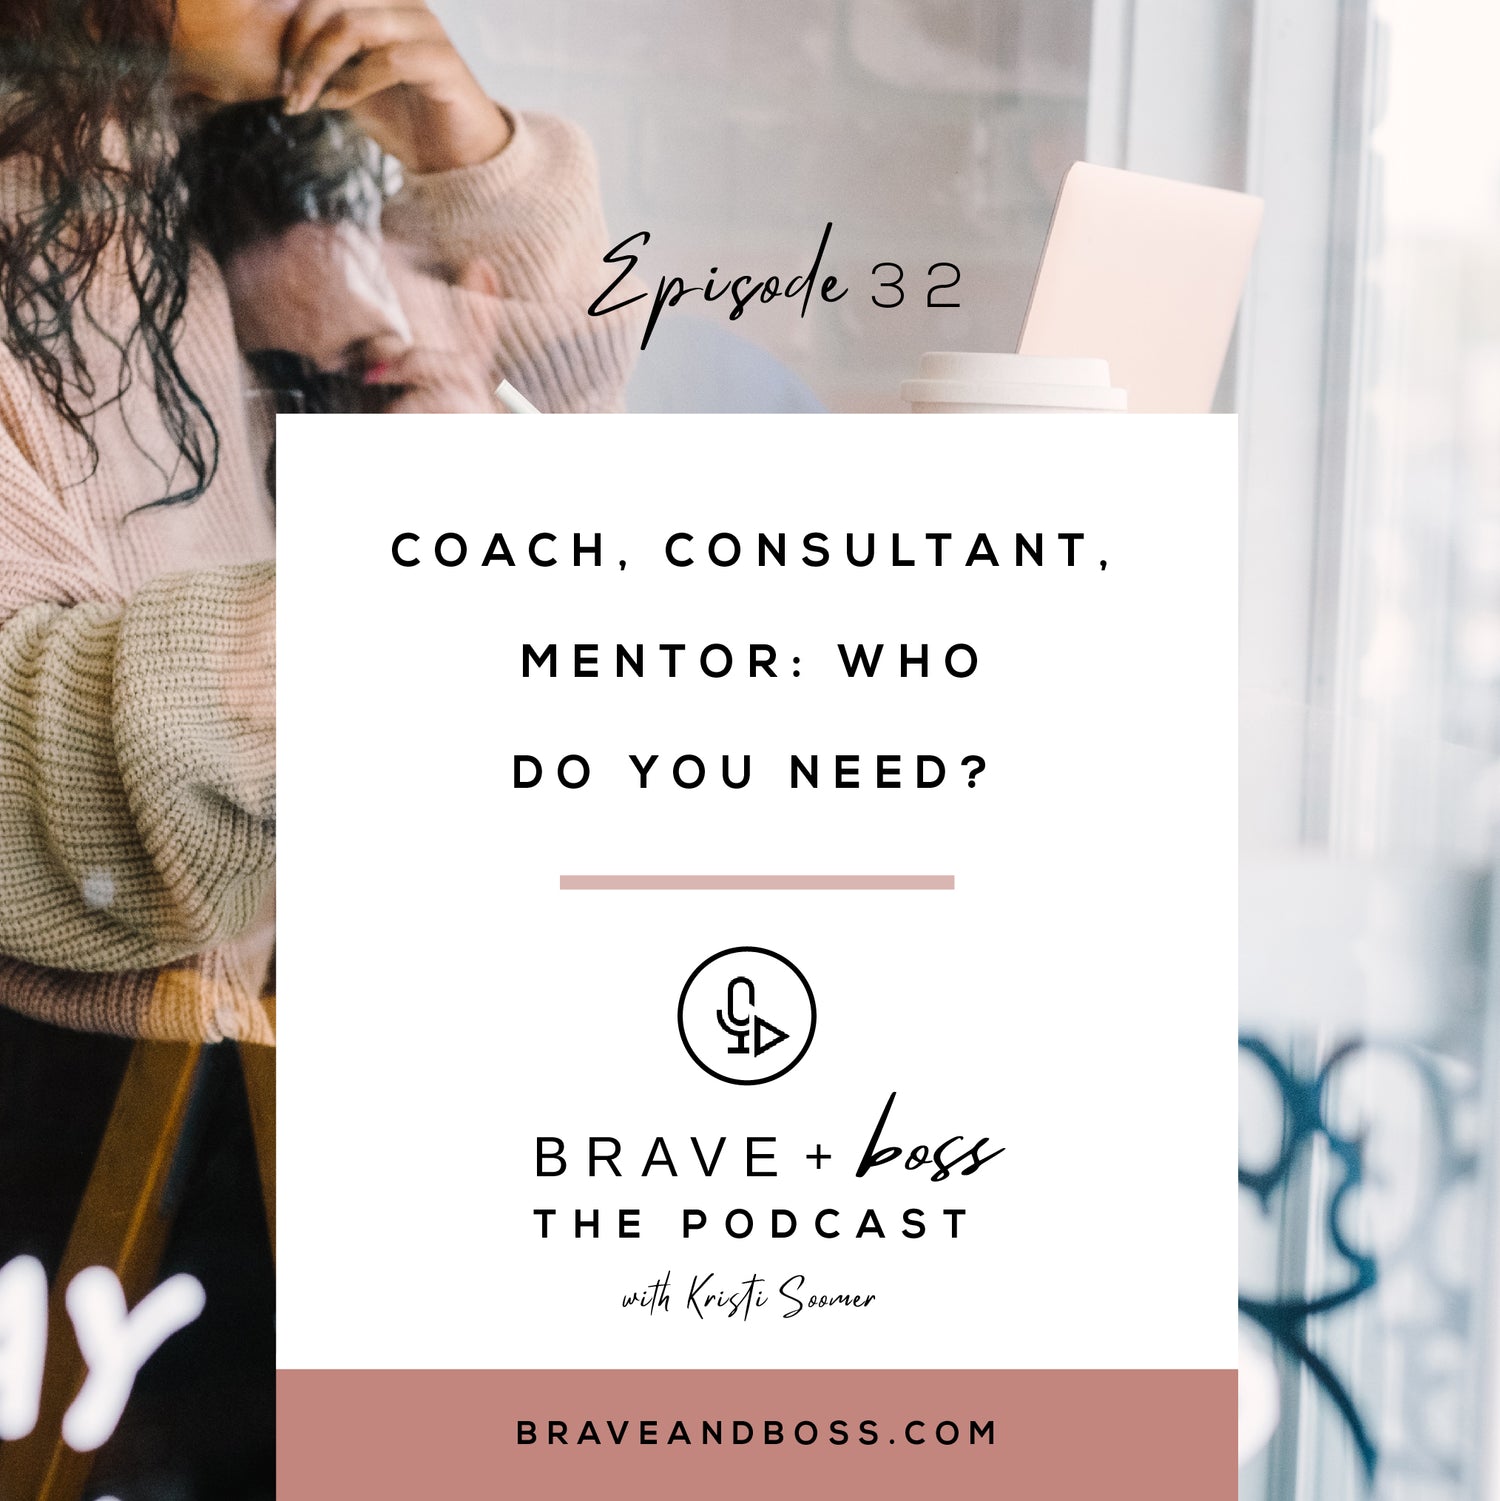 Coach, Consultant, Mentor: Who do you need?